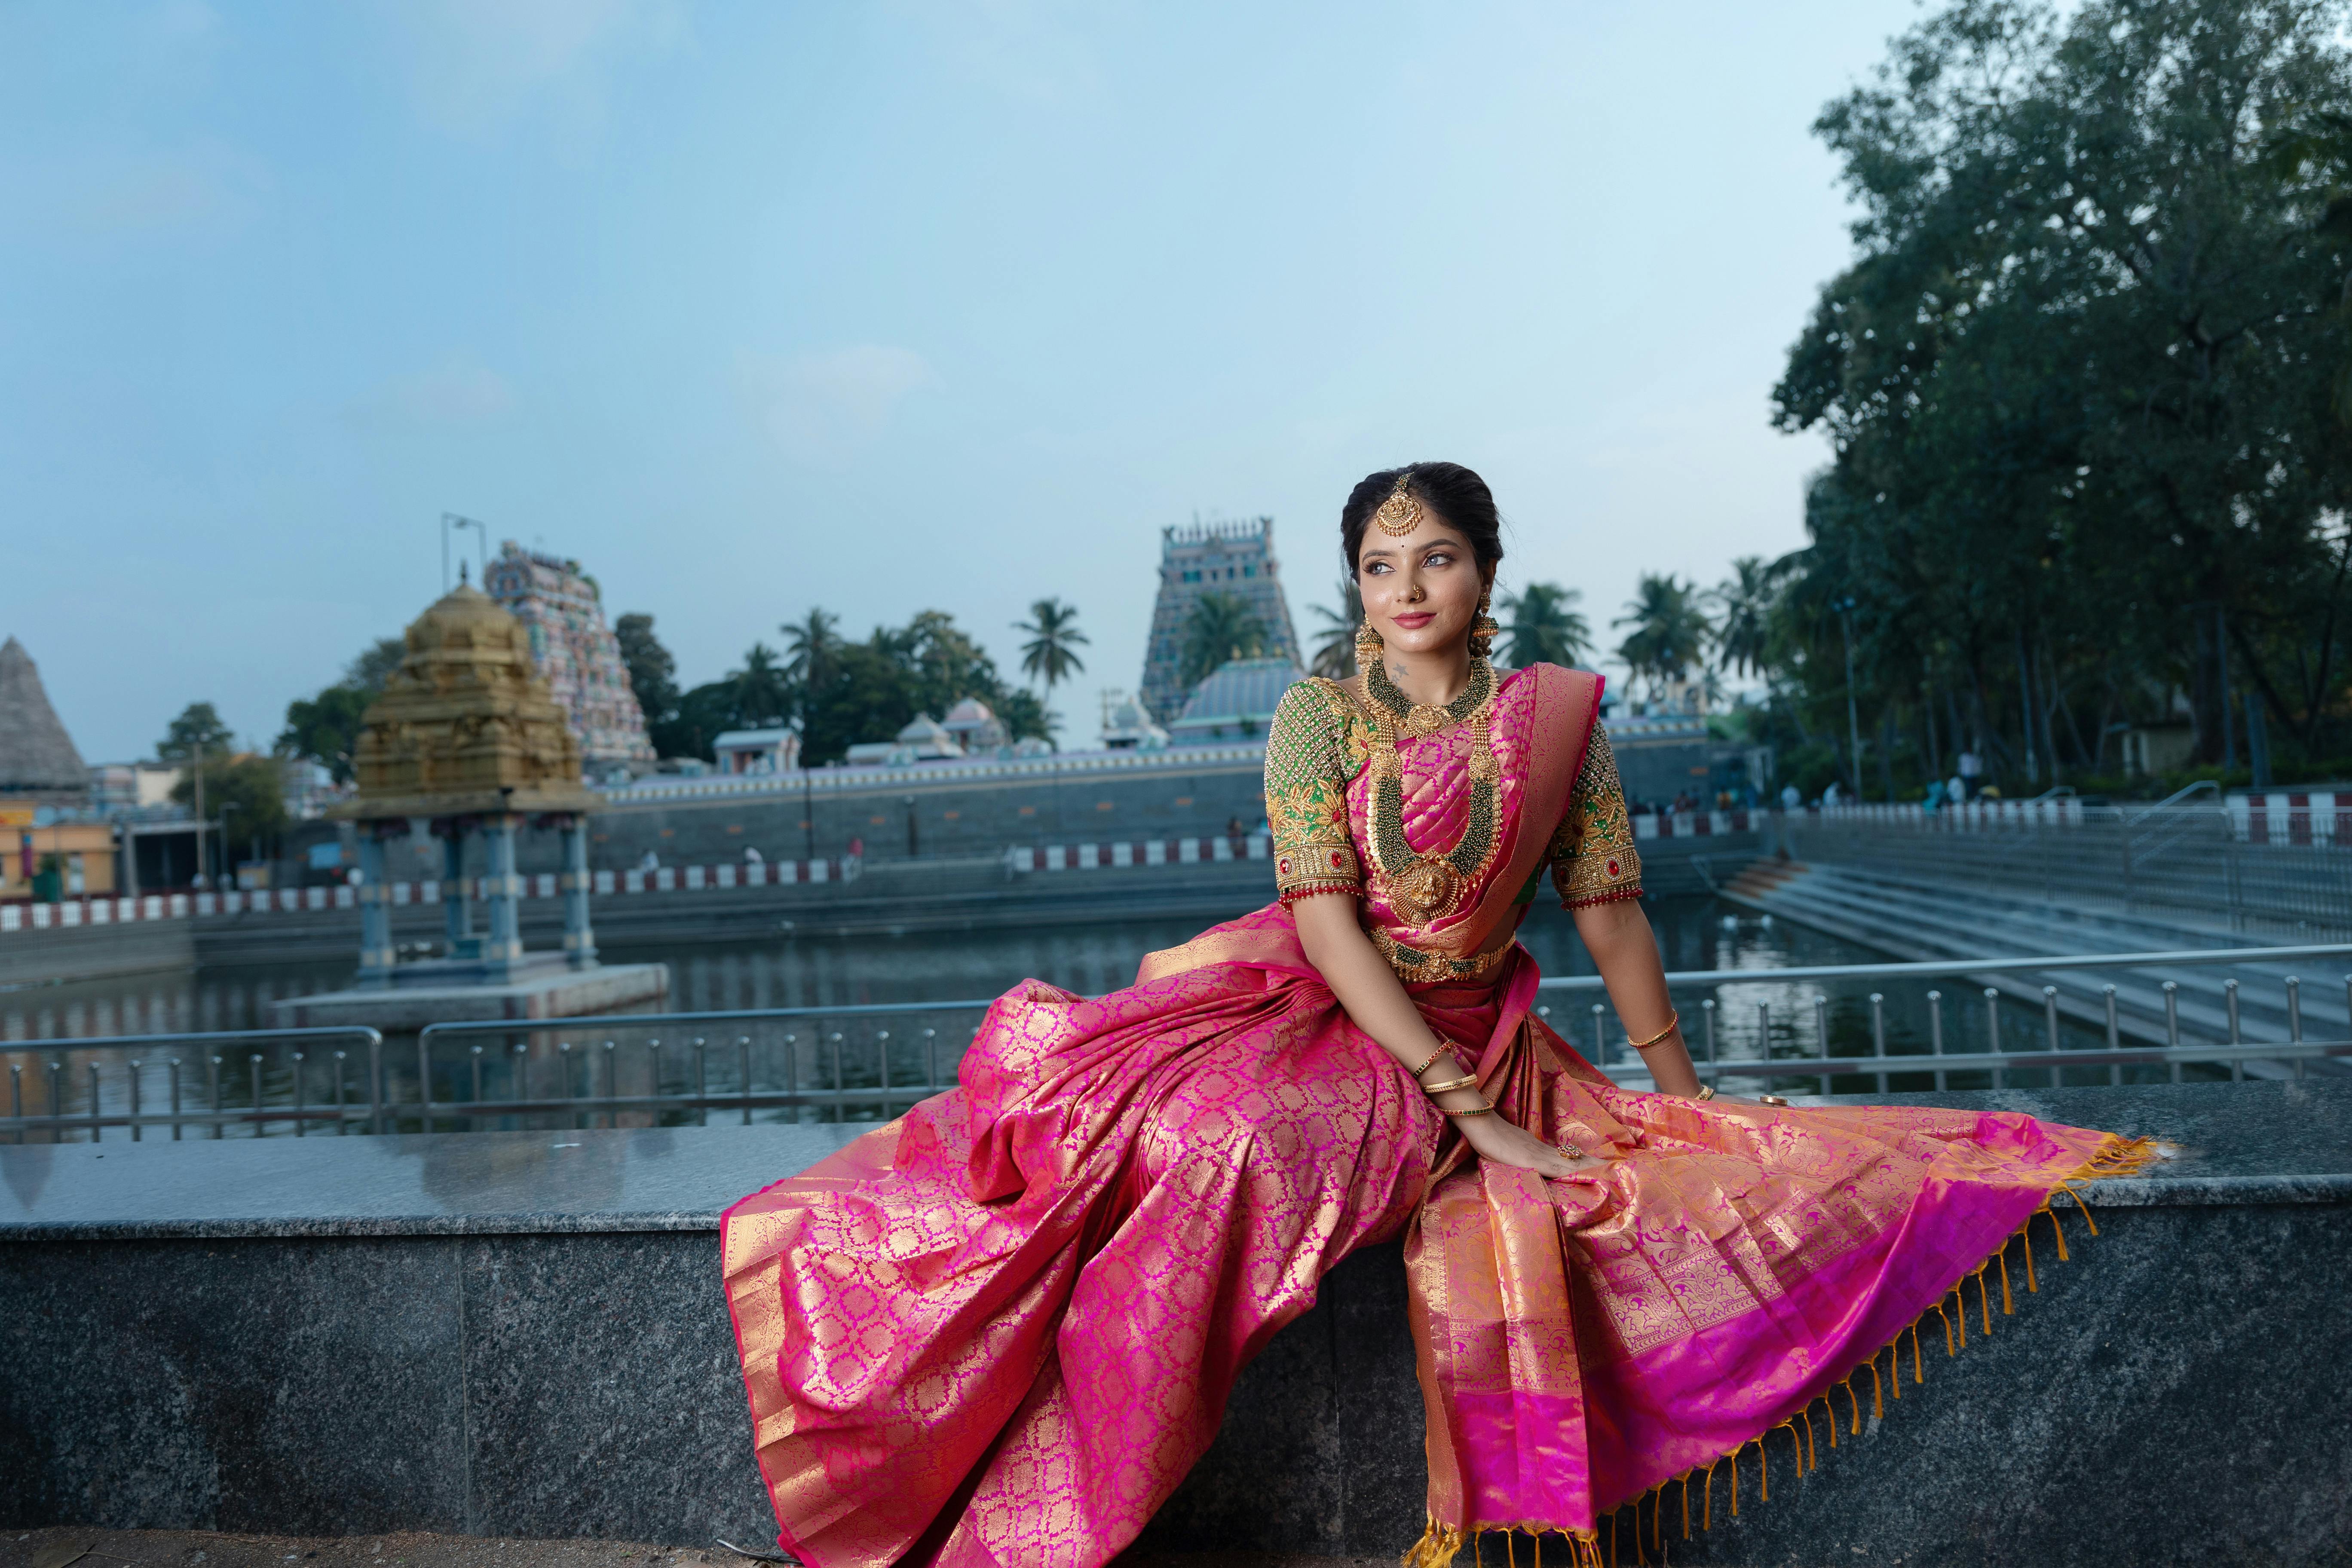 Top 9 saree poses for women – News9Live